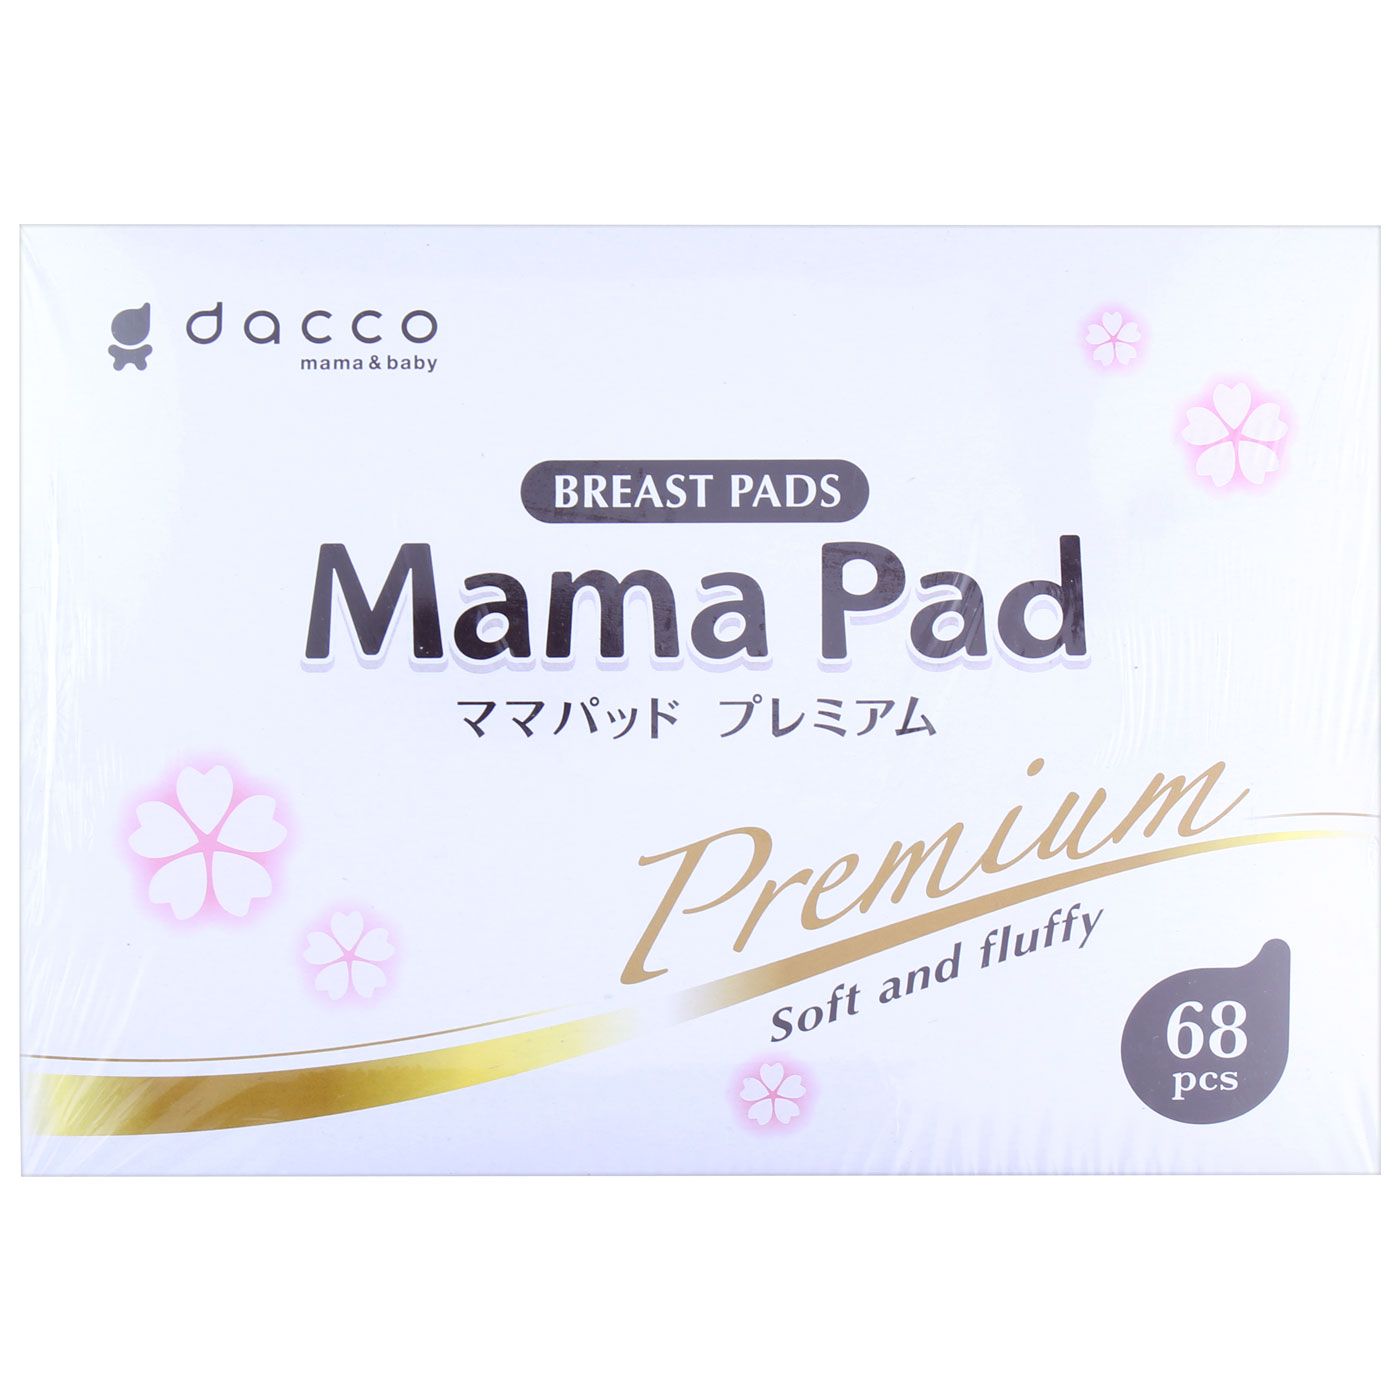 Dacco Mama Pad Premium Isi 68pcs - 1